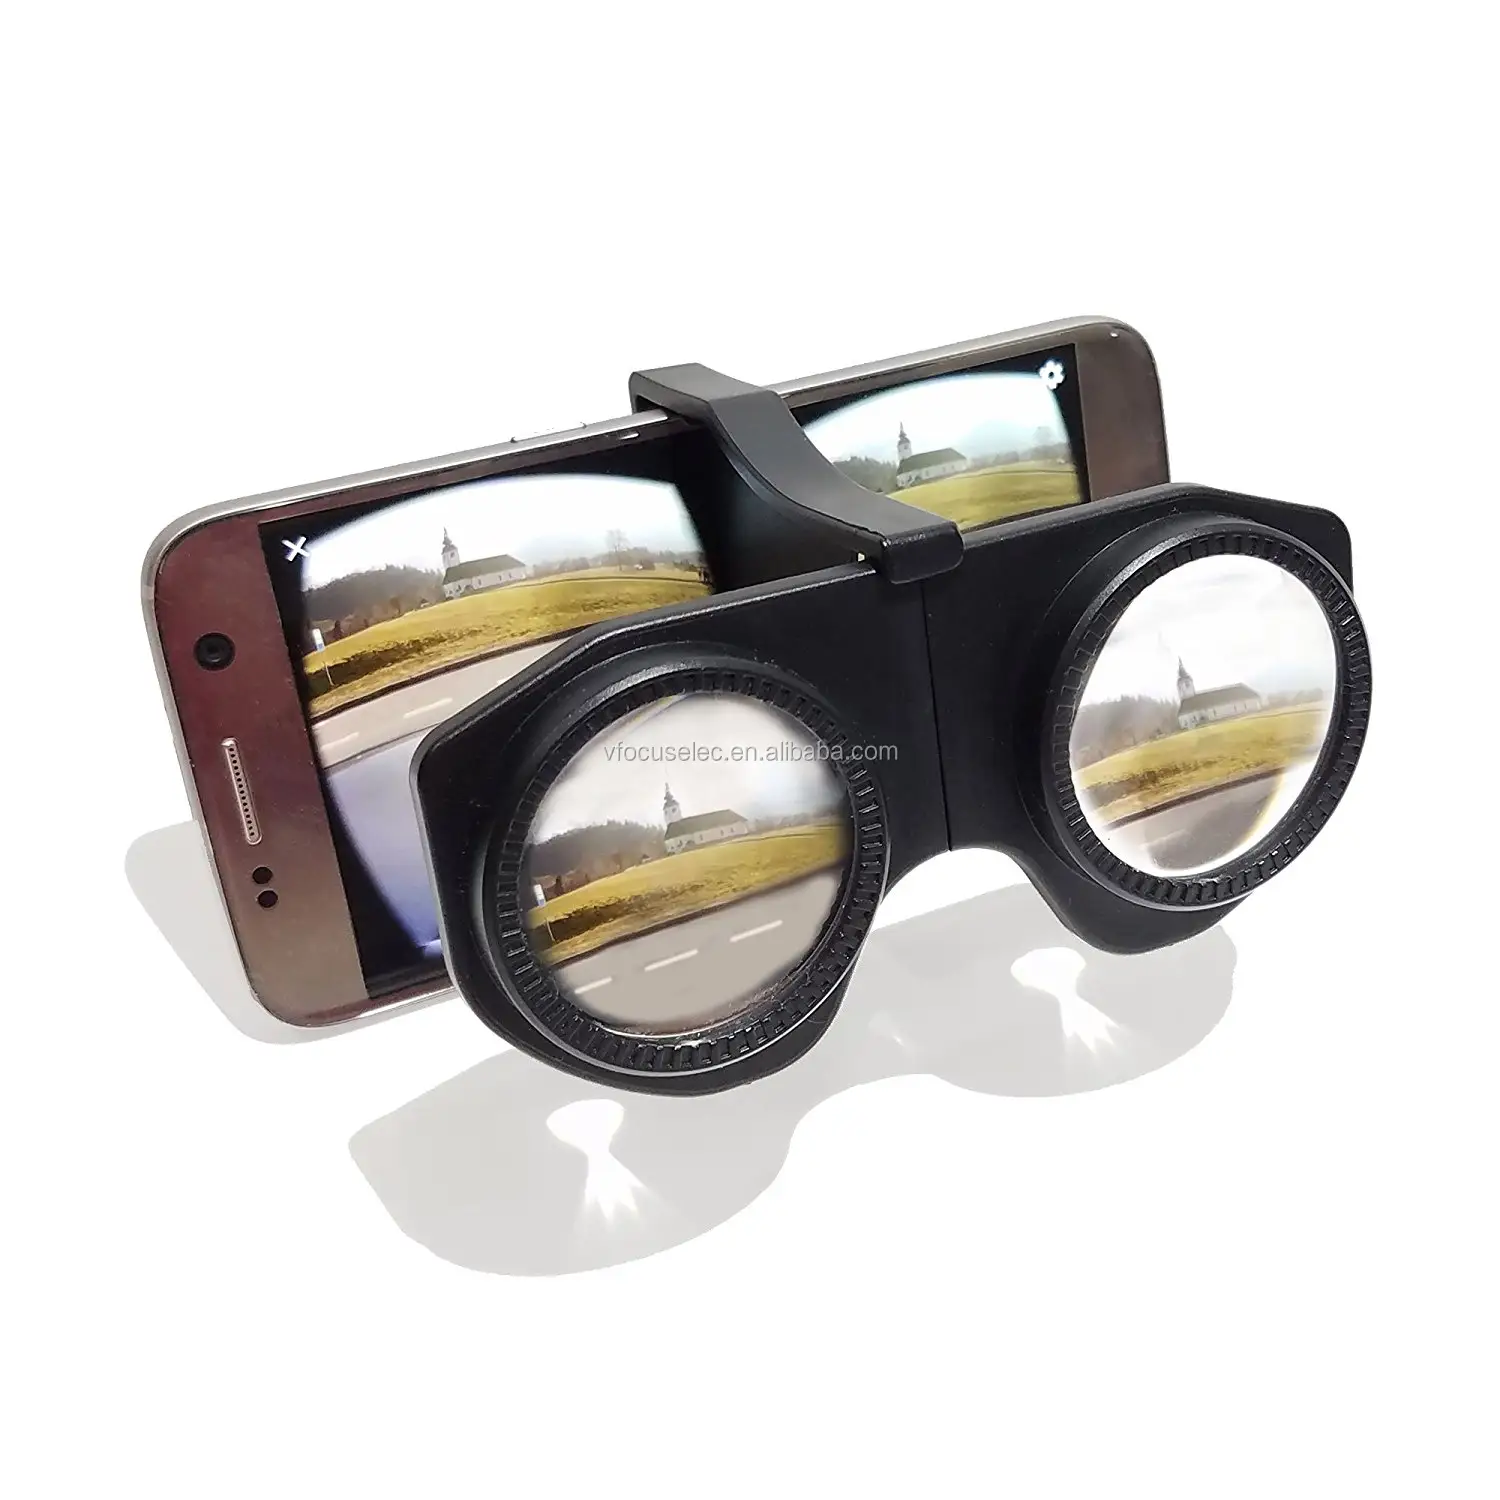 Faltbare Mini-Kunststoff-VR-Brille mit HD-VR-Objektiv, 3D-Virtual-Reality-Headset Kompatibel mit Android-und iOS-Smartphones